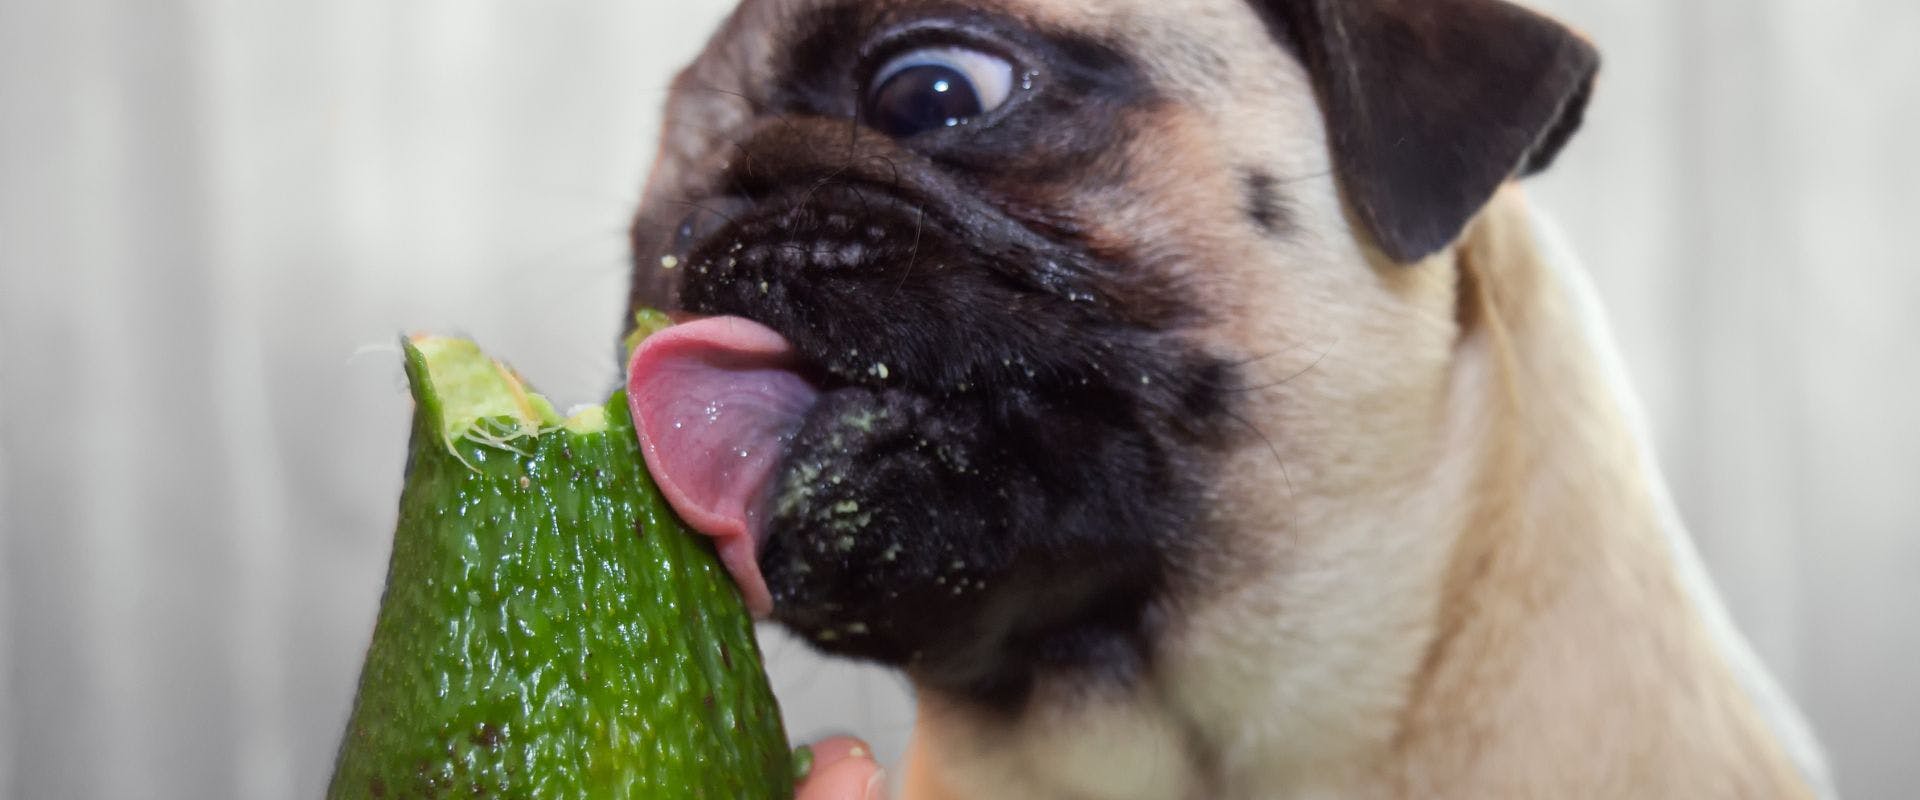 Pug licking an avocado